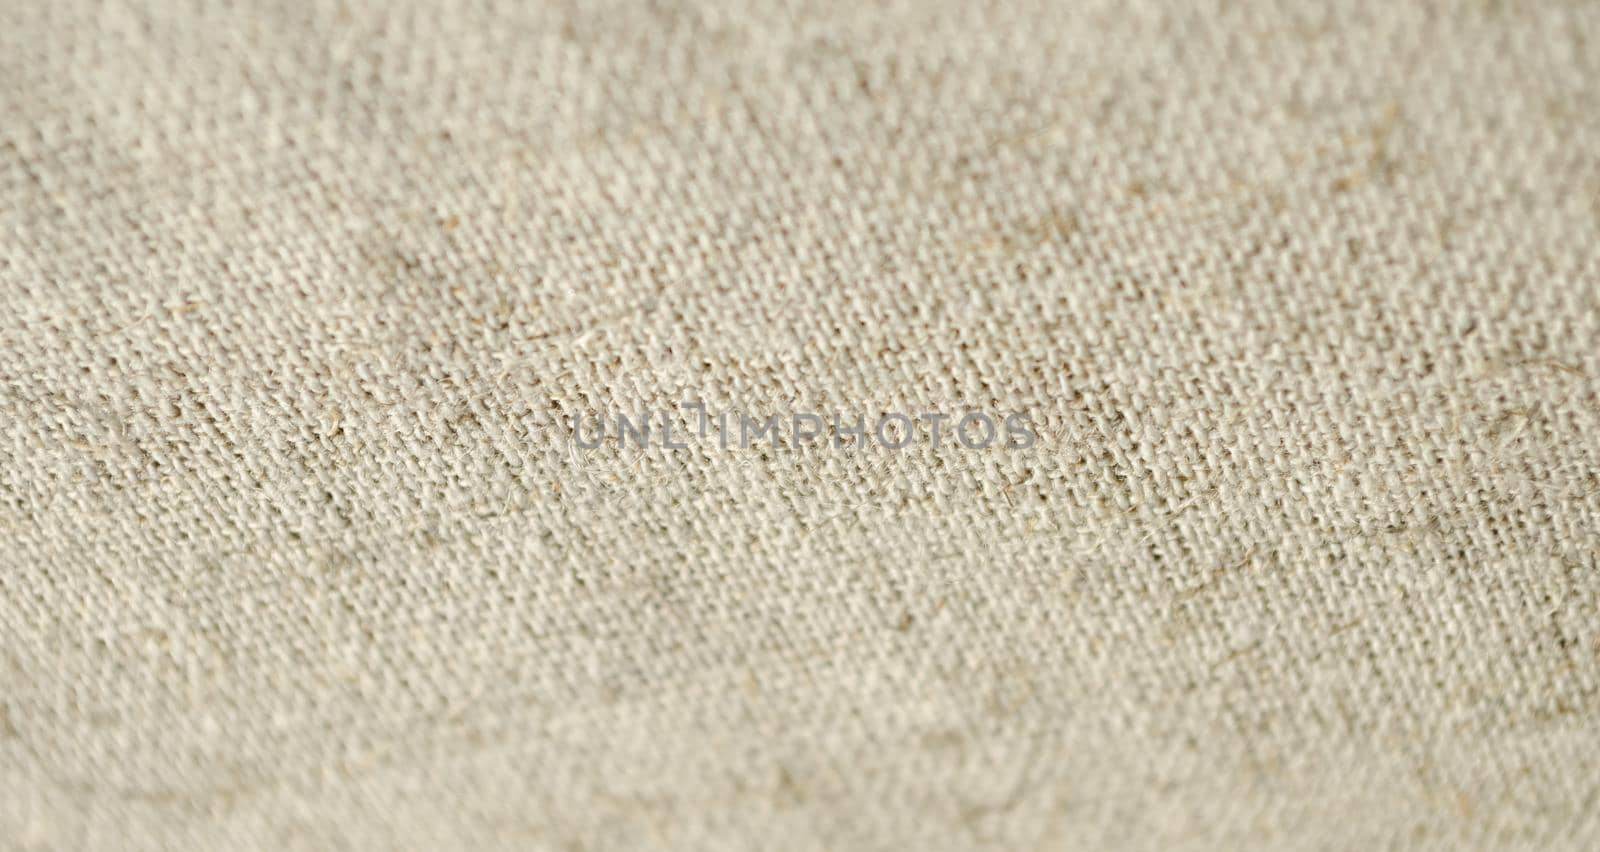 Texture of the vintage homespun linen textile